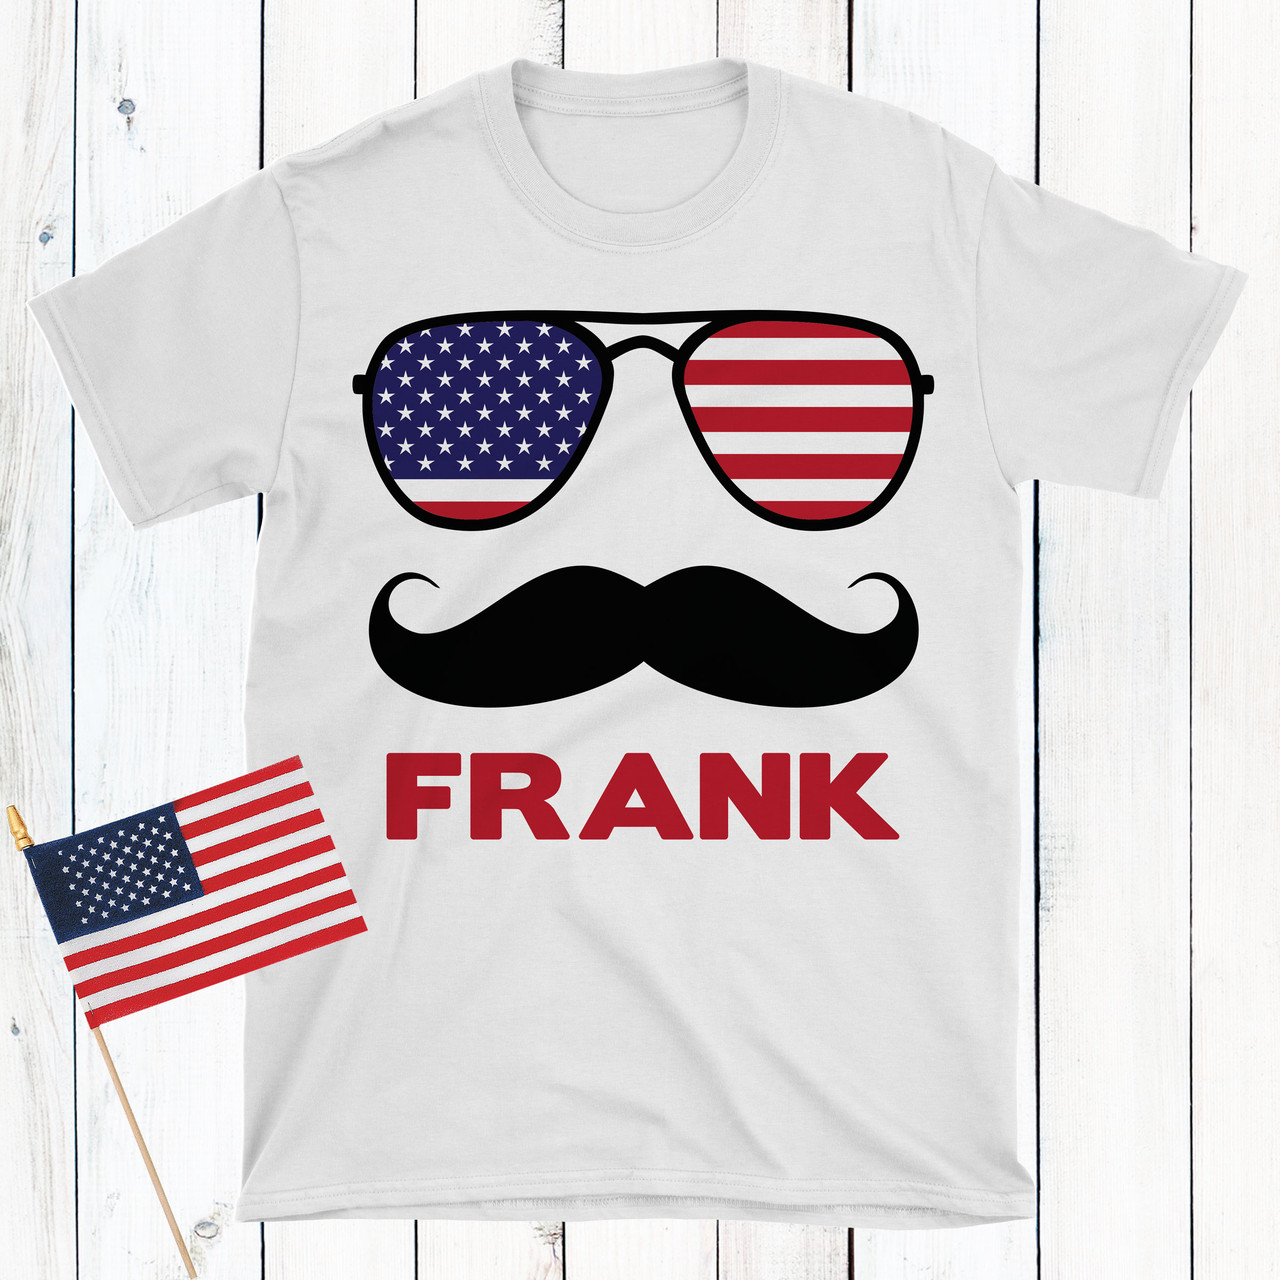 Personalized Mr. America T-Shirt